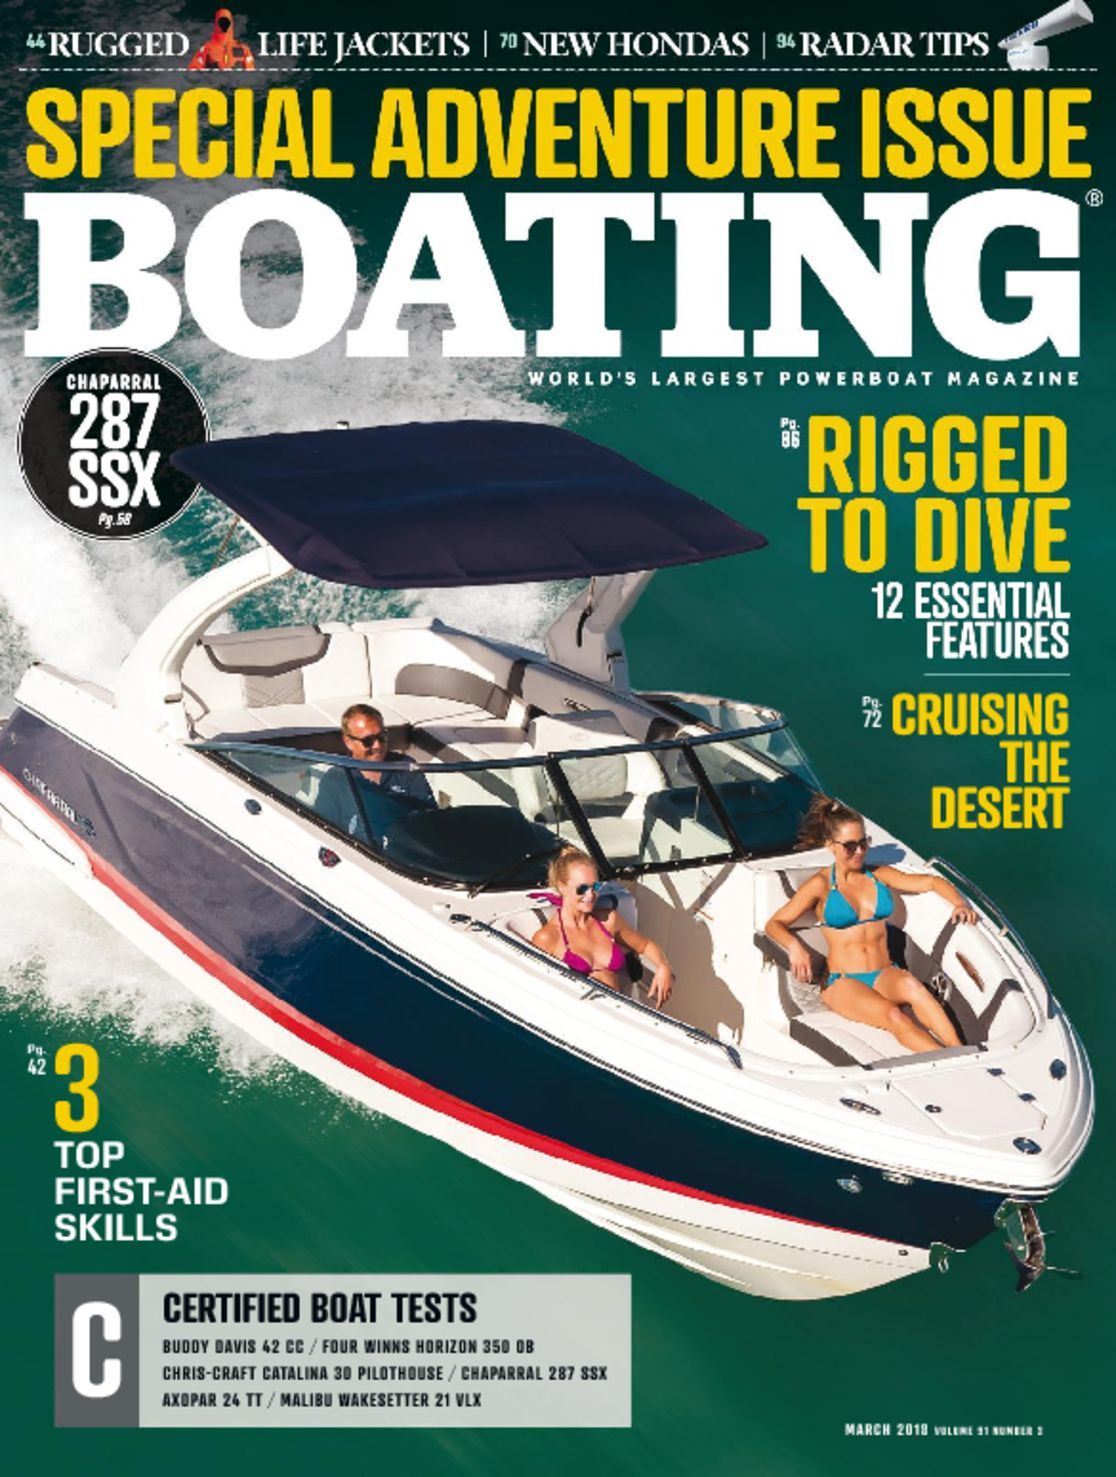 powerboat and yacht magazine